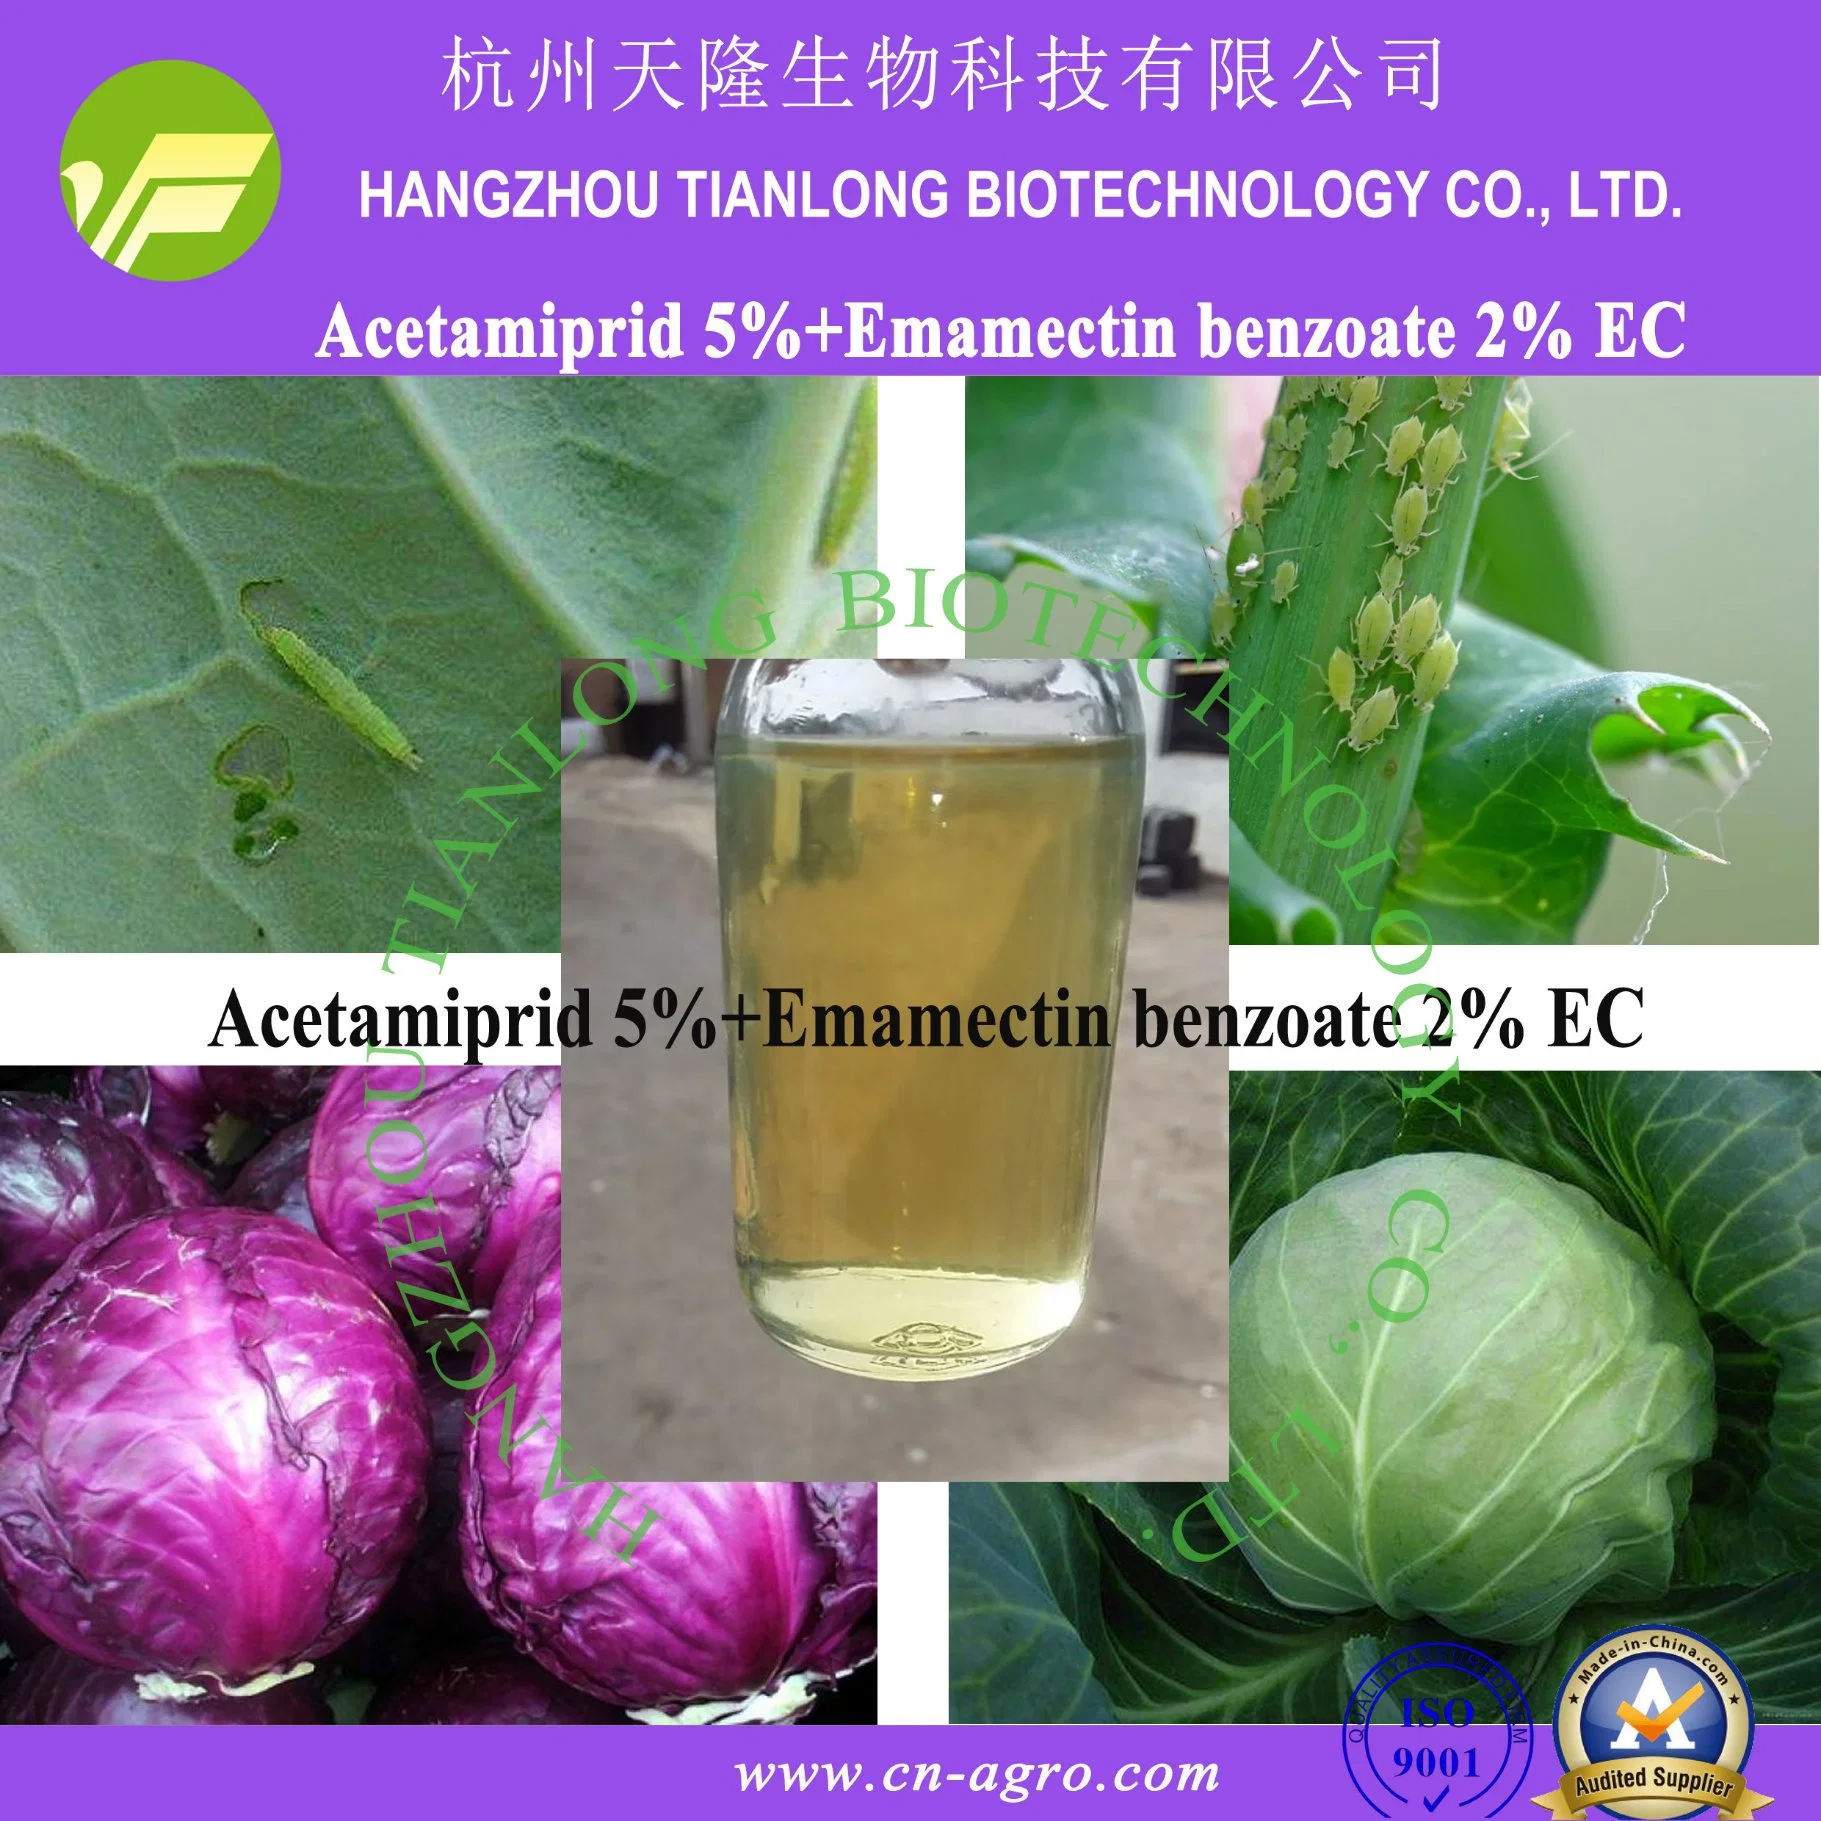 Acetamipride 5%+benzoato de emamectina 2%CE-acetamipride+benzoato de emamectina (5%+2%) Bioinseticida mistura